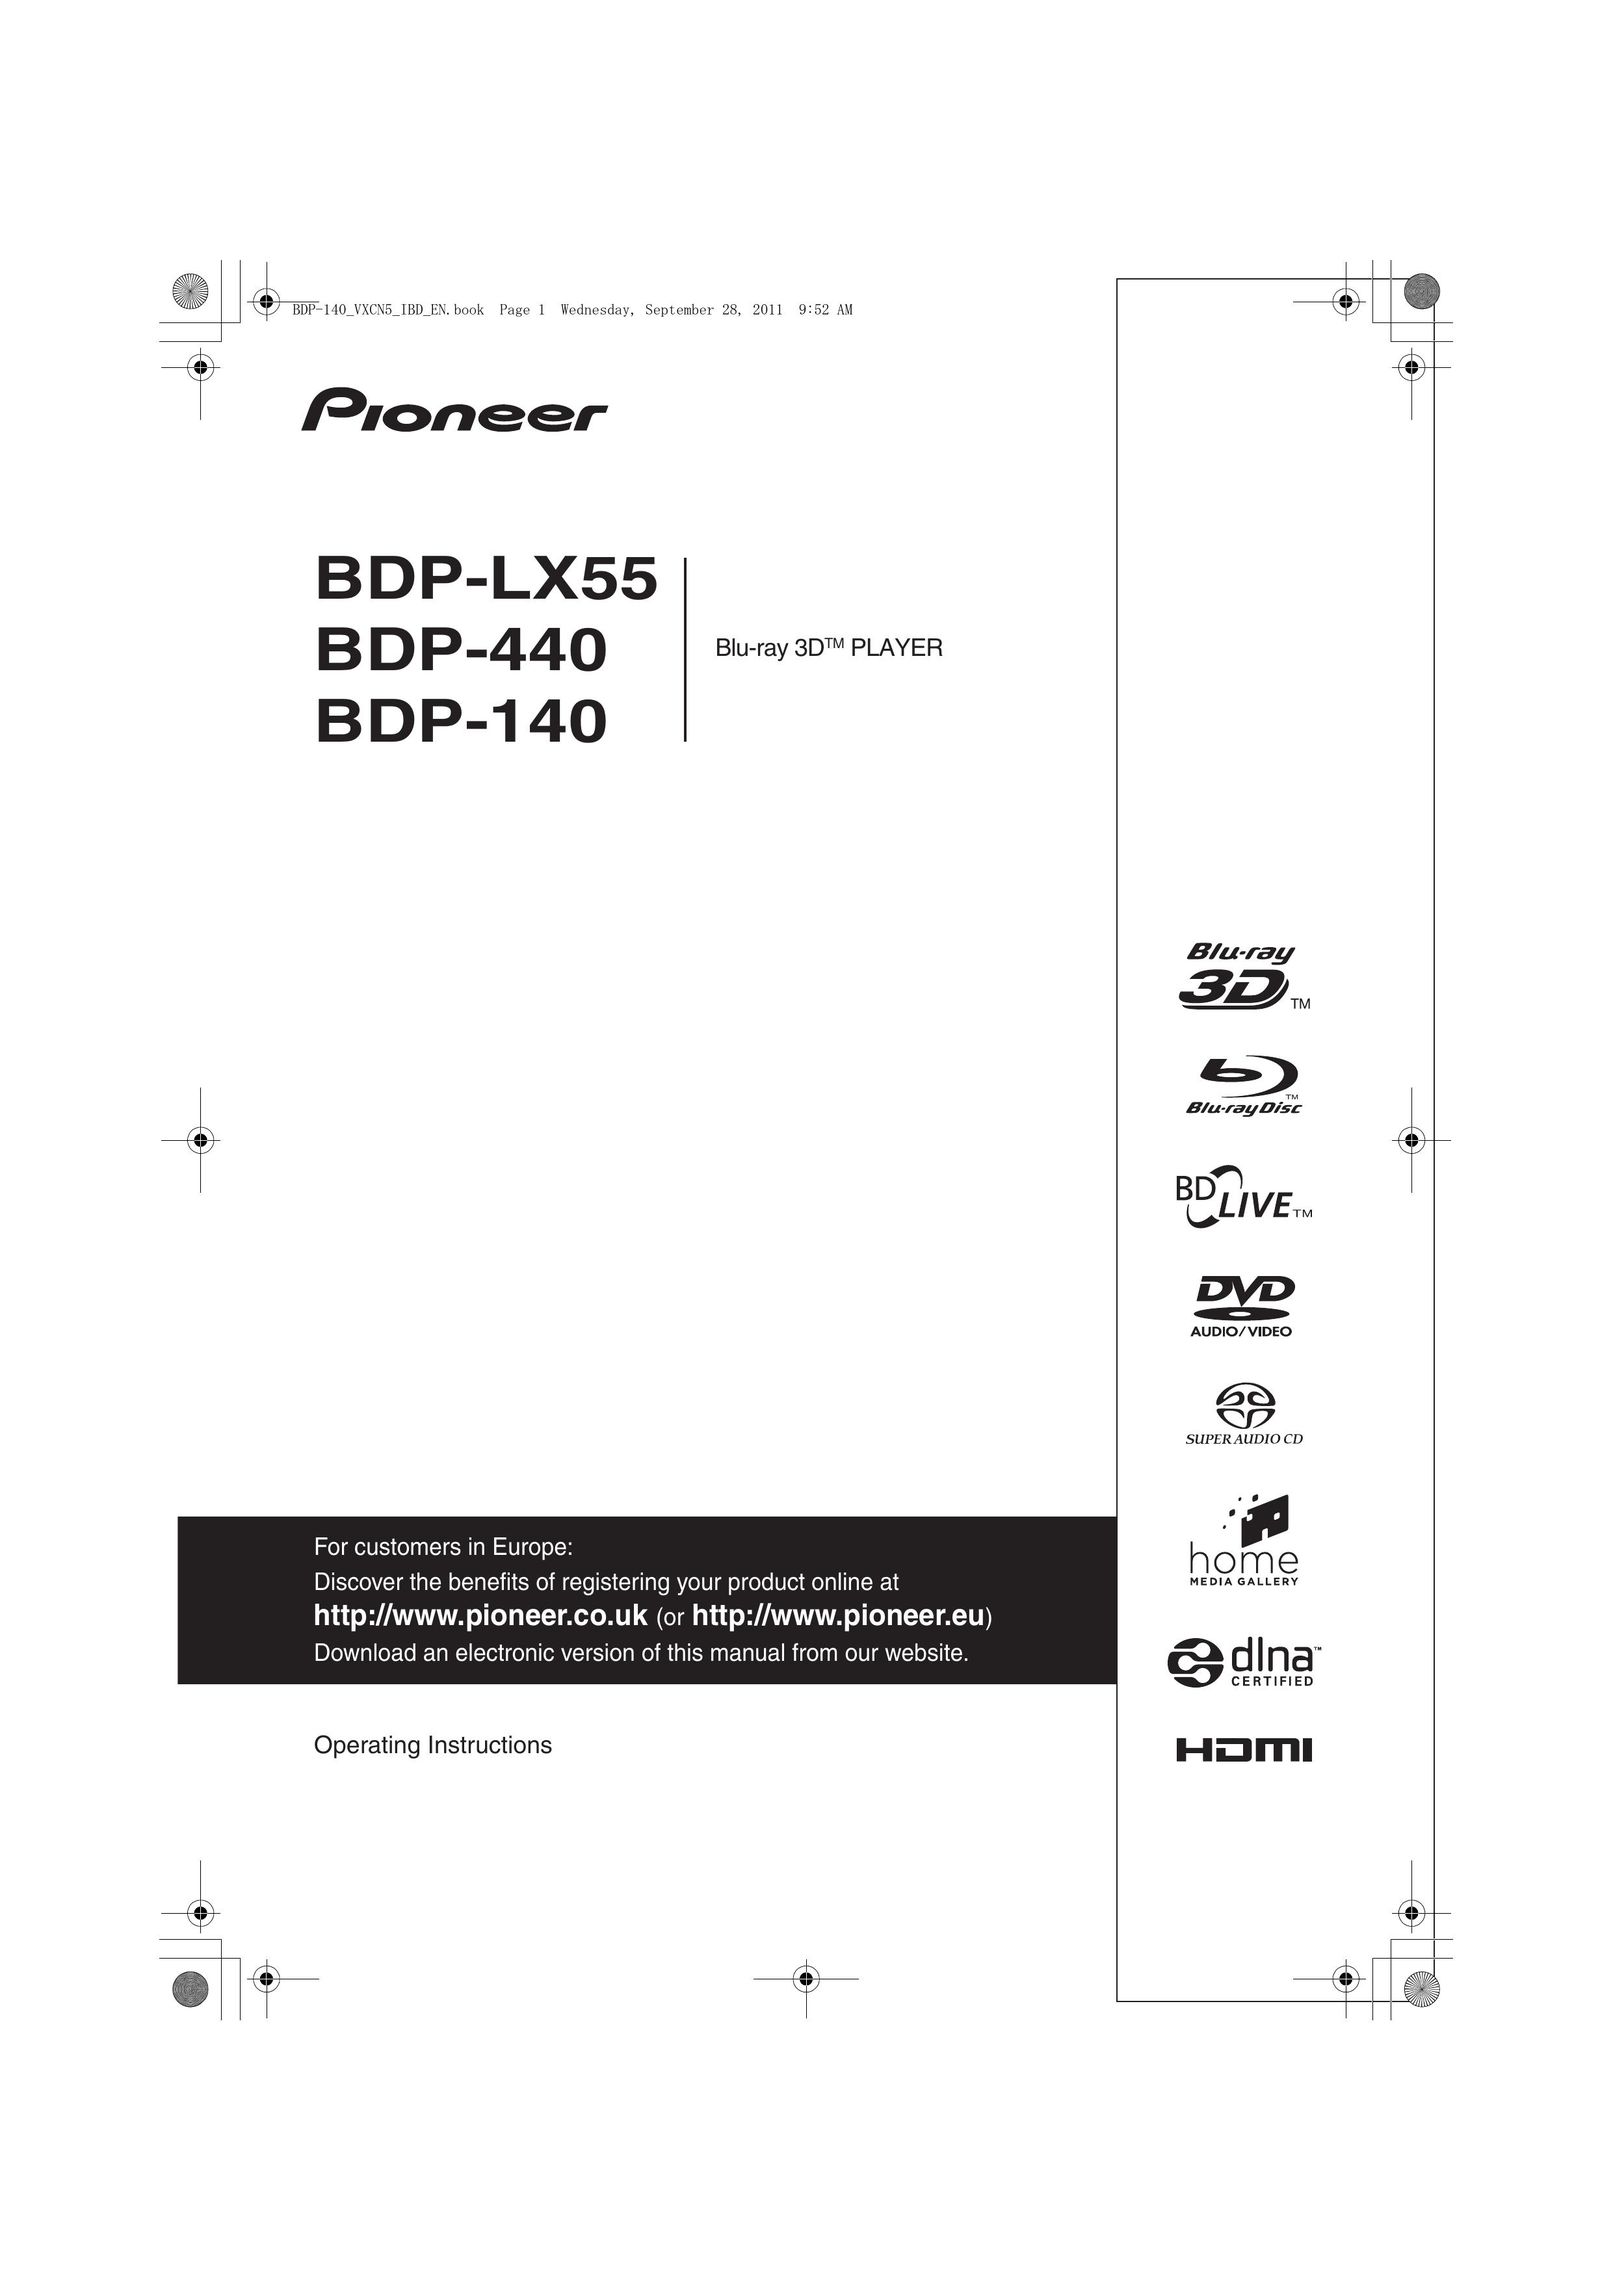 Panasonic BDP-440 Blu-ray Player User Manual